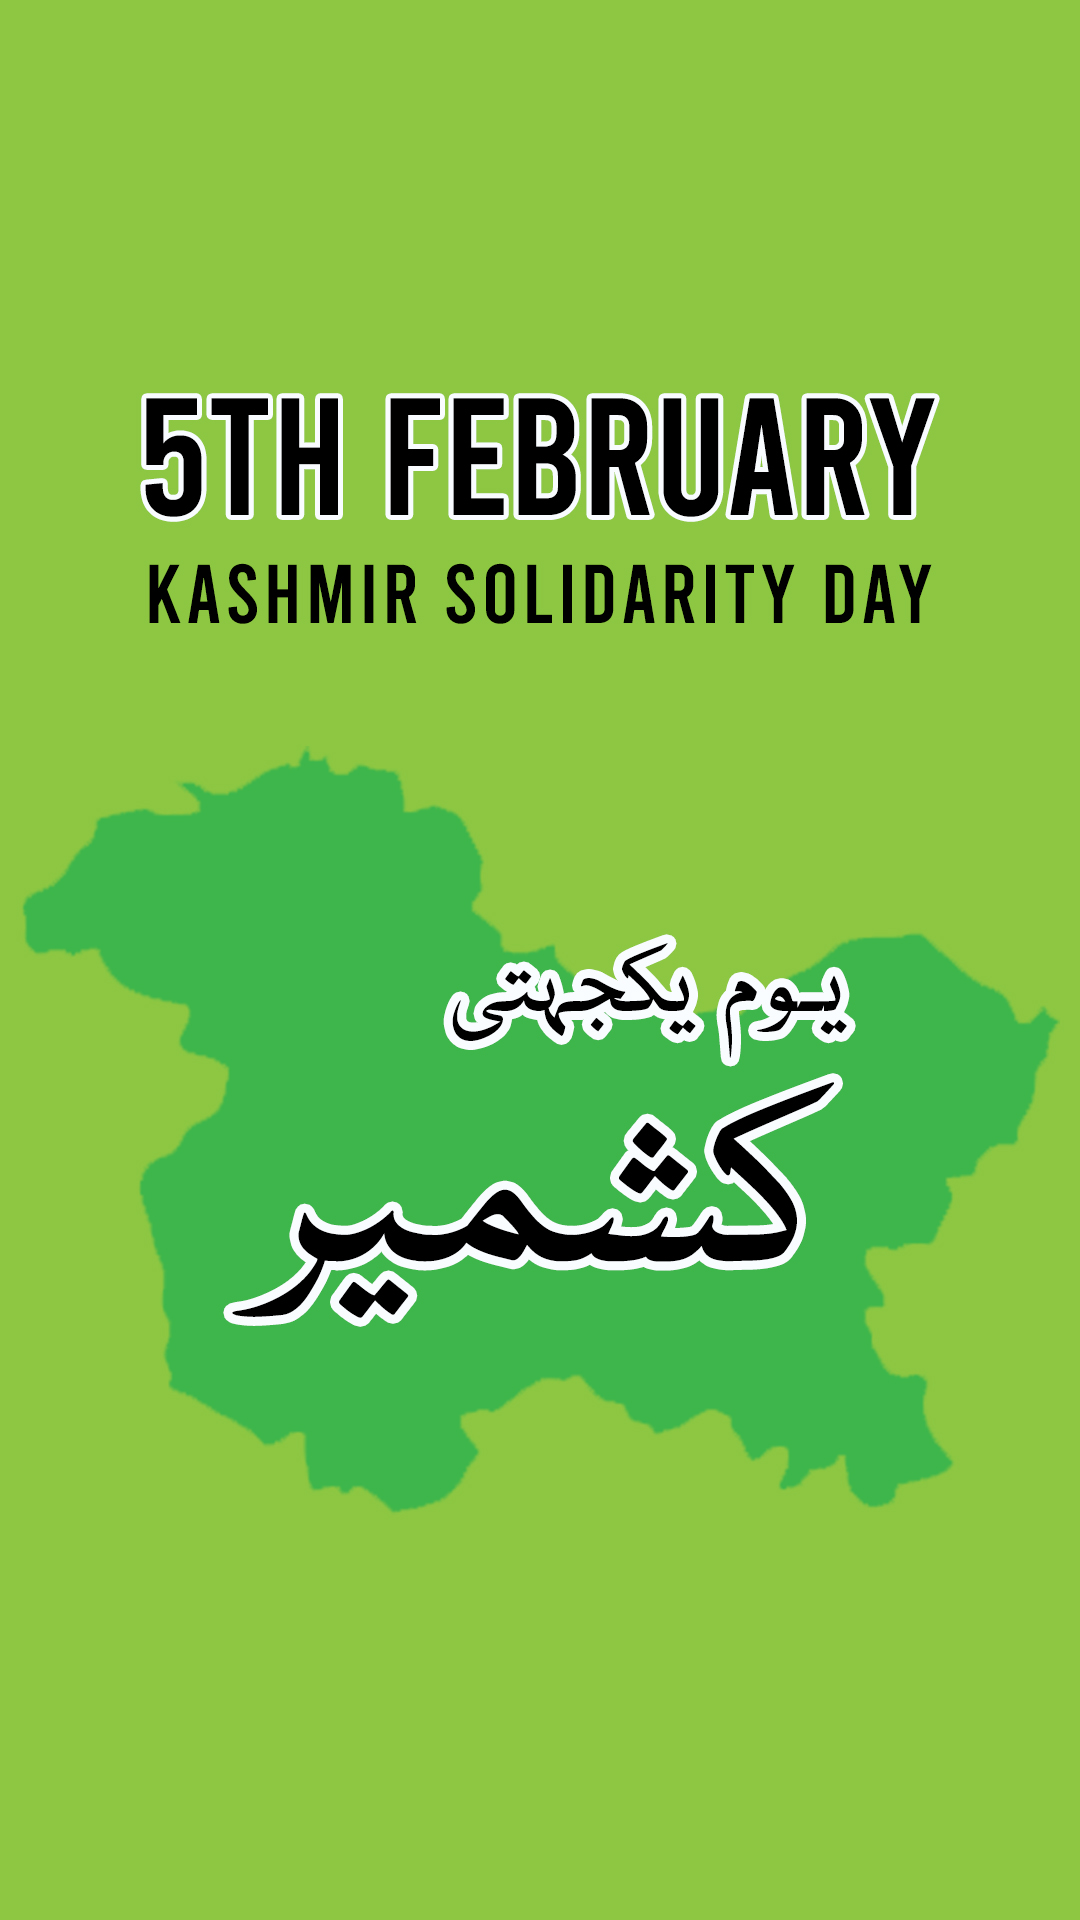 Kashmir Solidarity Day - 5th February - Download Mobile Phone full HD  wallpaper